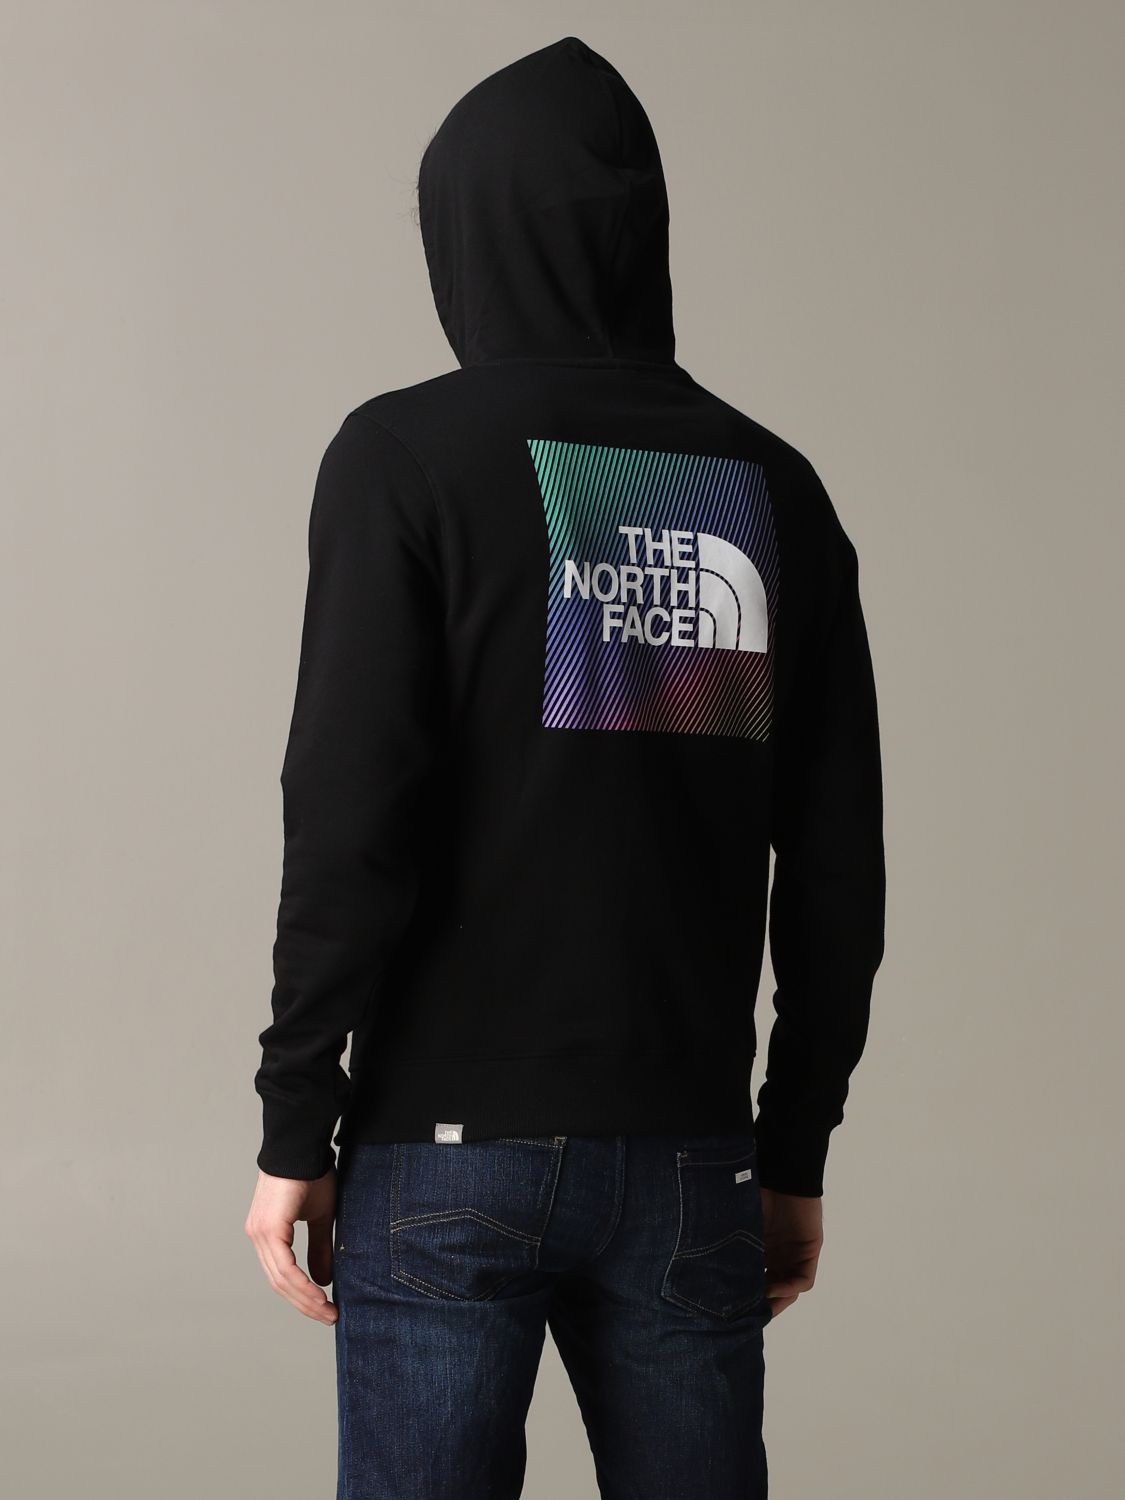 the north face black sweatshirt